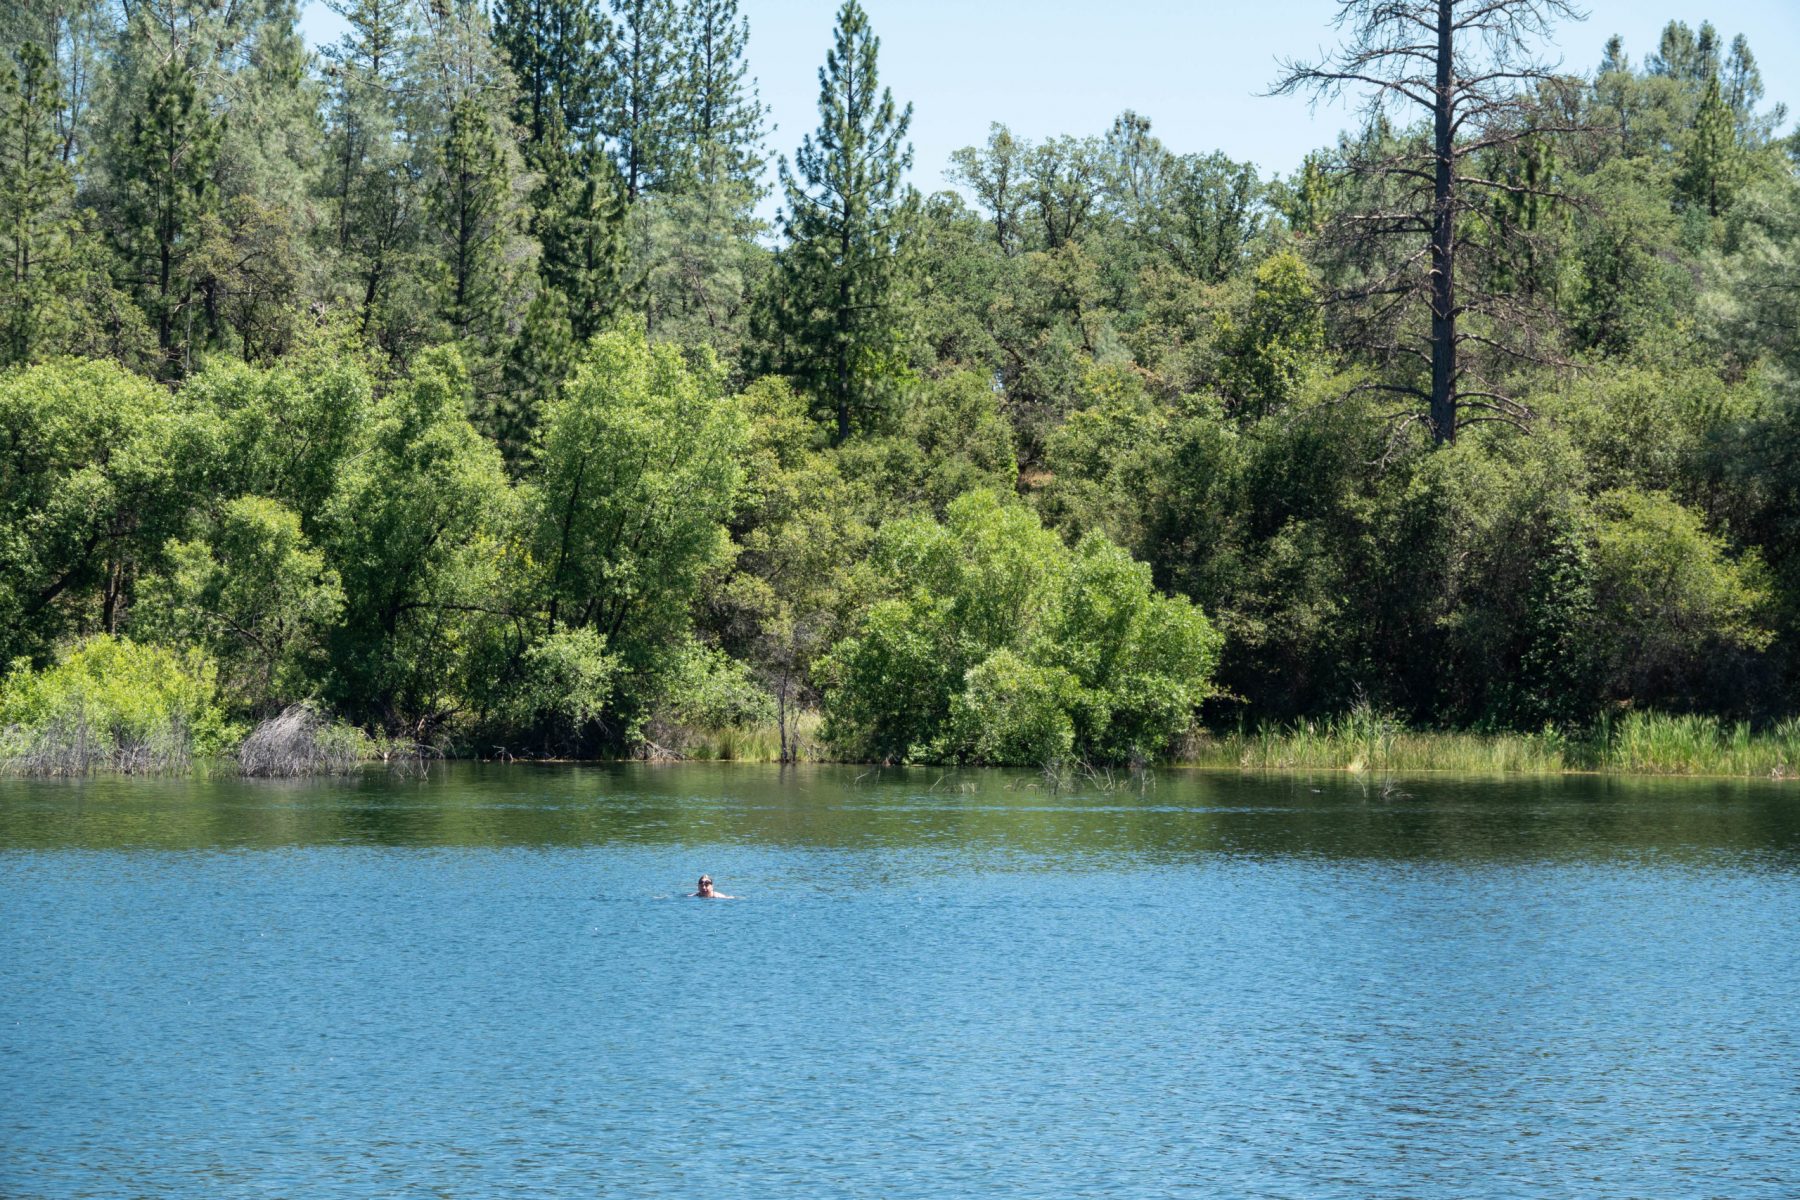 Sarah swimming across the reservoir